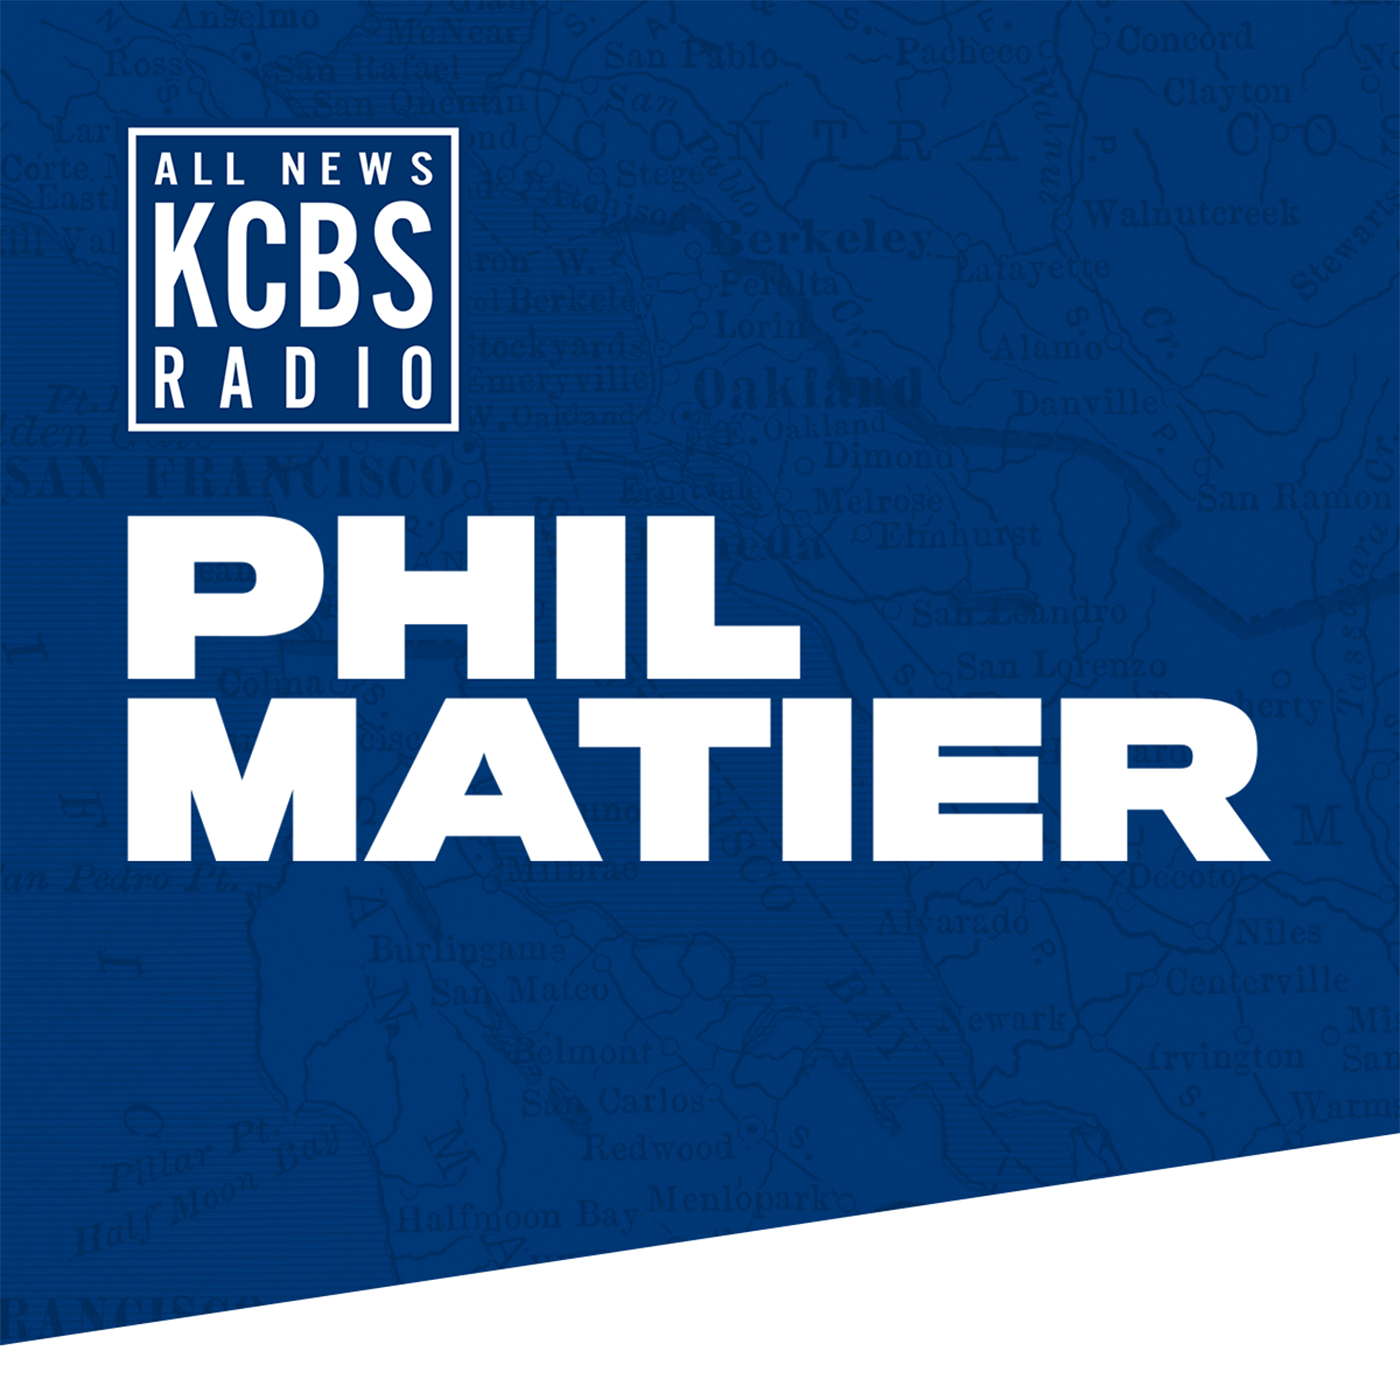 Phil Matier: California to reopen on June 15